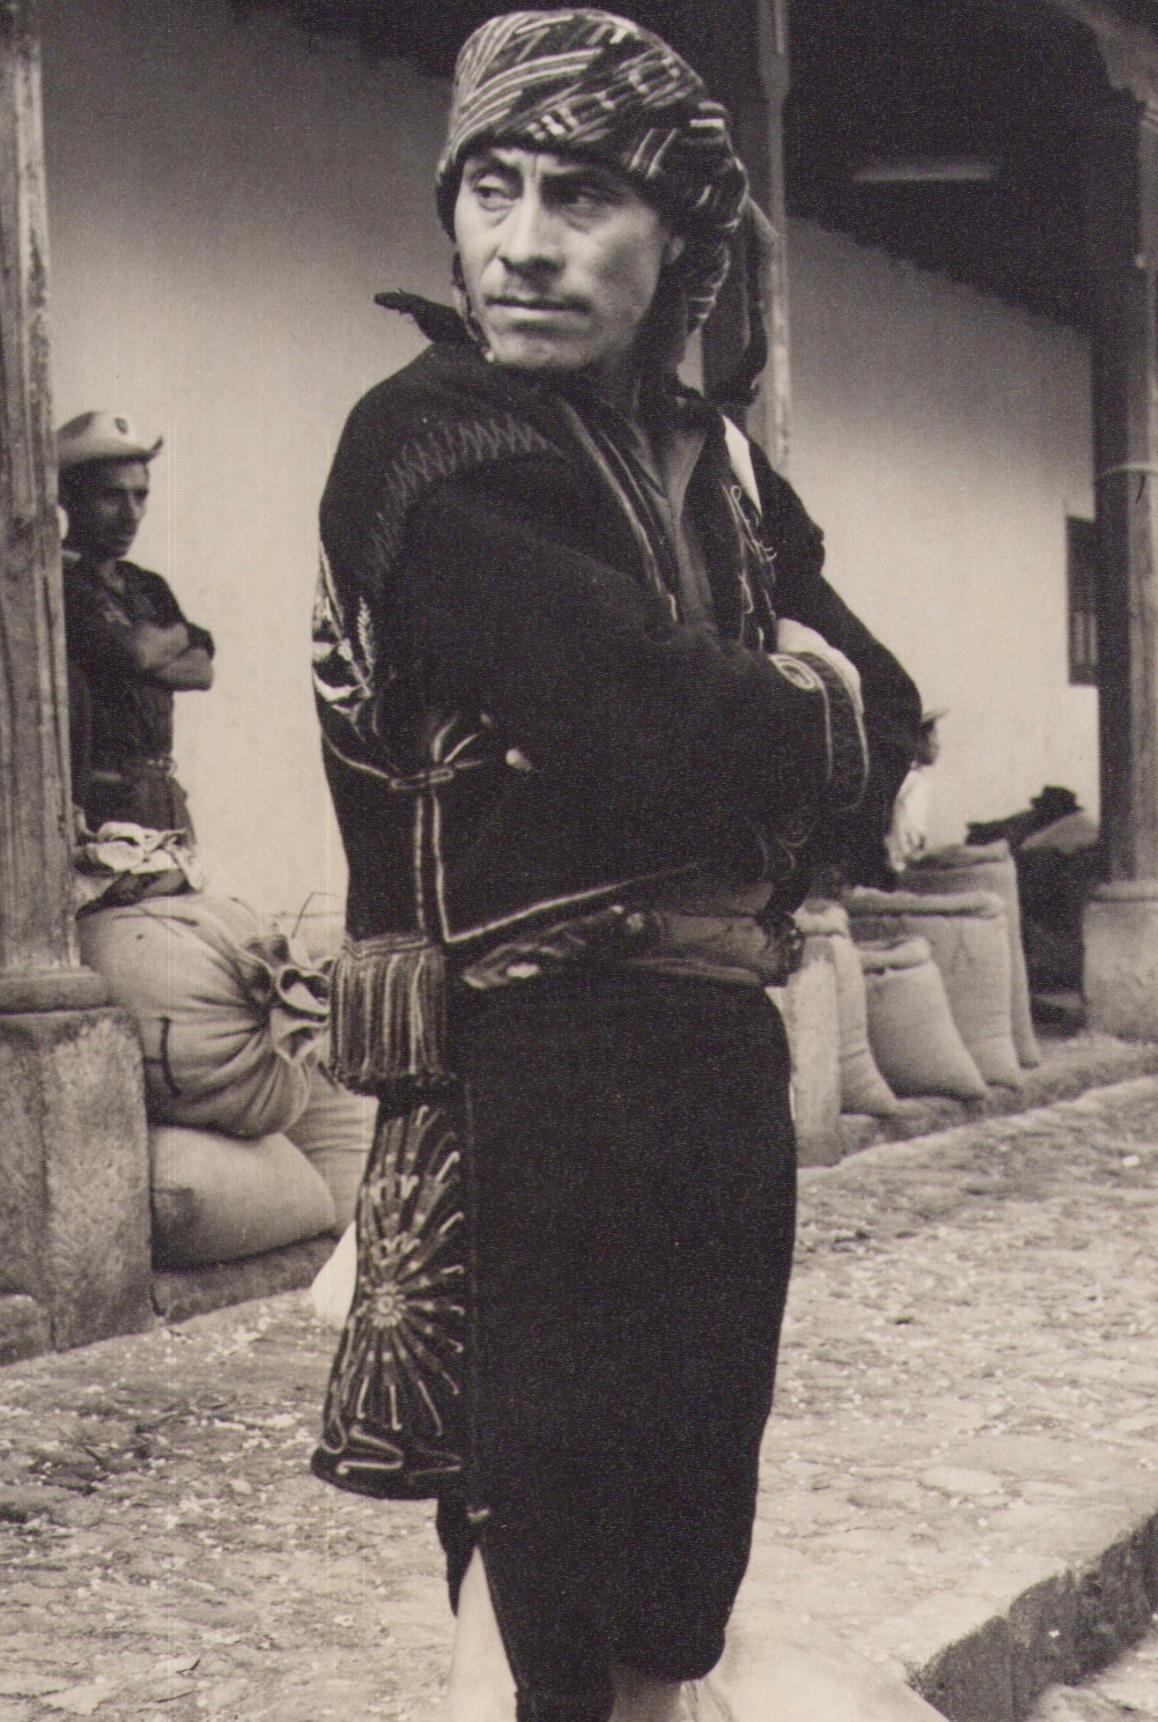 Guatemala, Man, Black and White Photography, ca. 1960s, 23, 1 x 17, 1 cm - Gray Portrait Photograph by Hanna Seidel